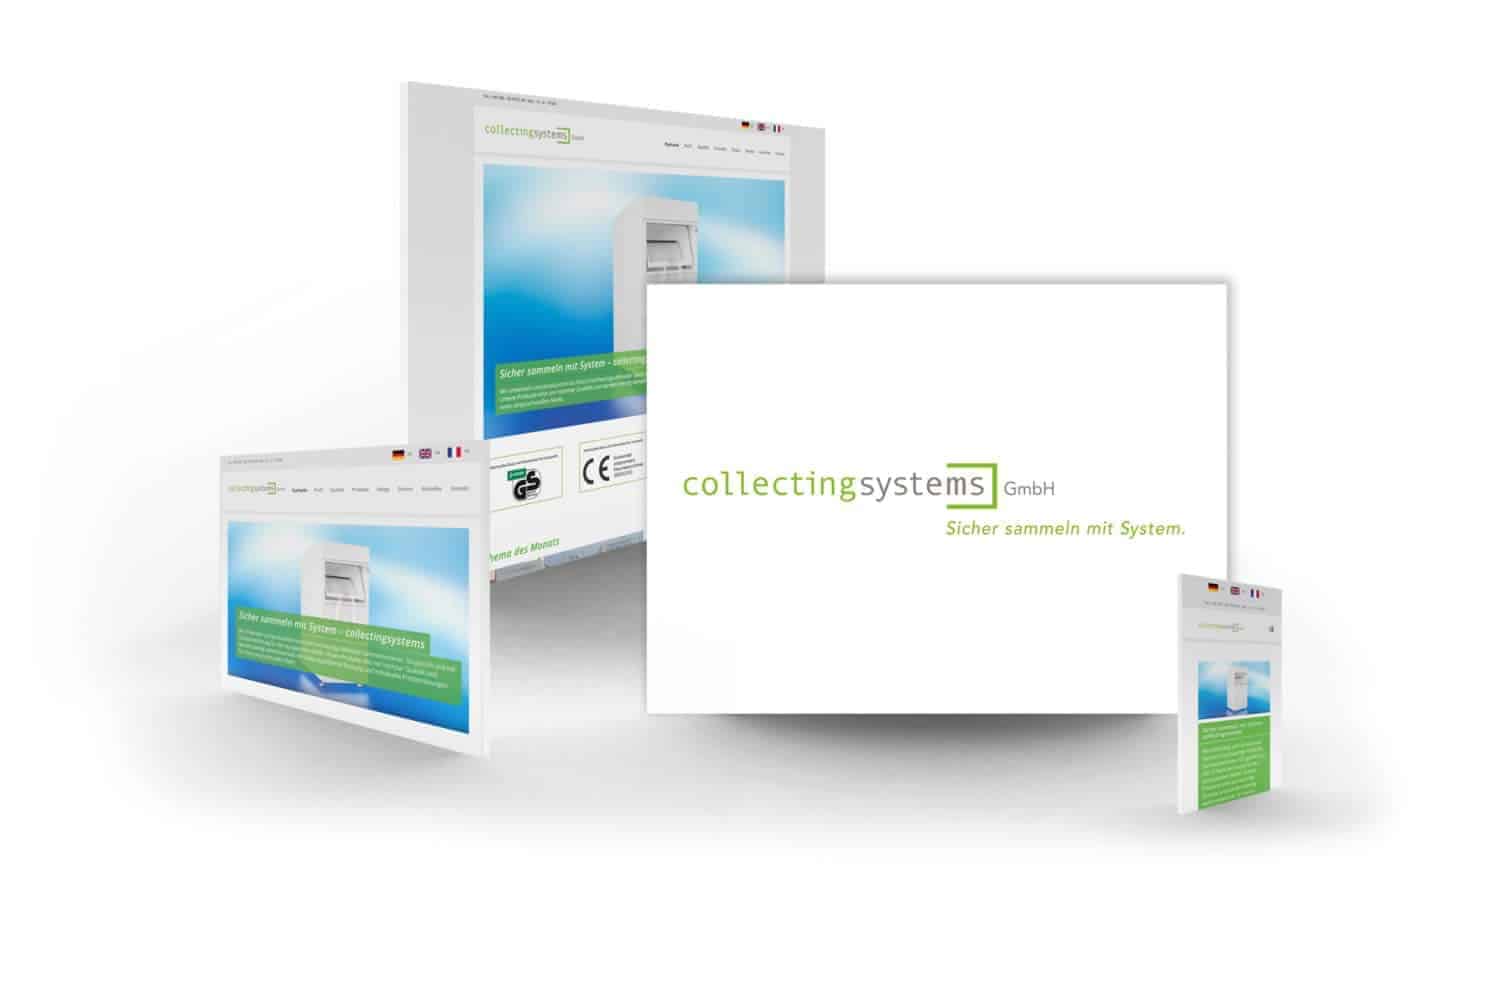 crocovision Webdesign Referenz collectingsystems GmbH